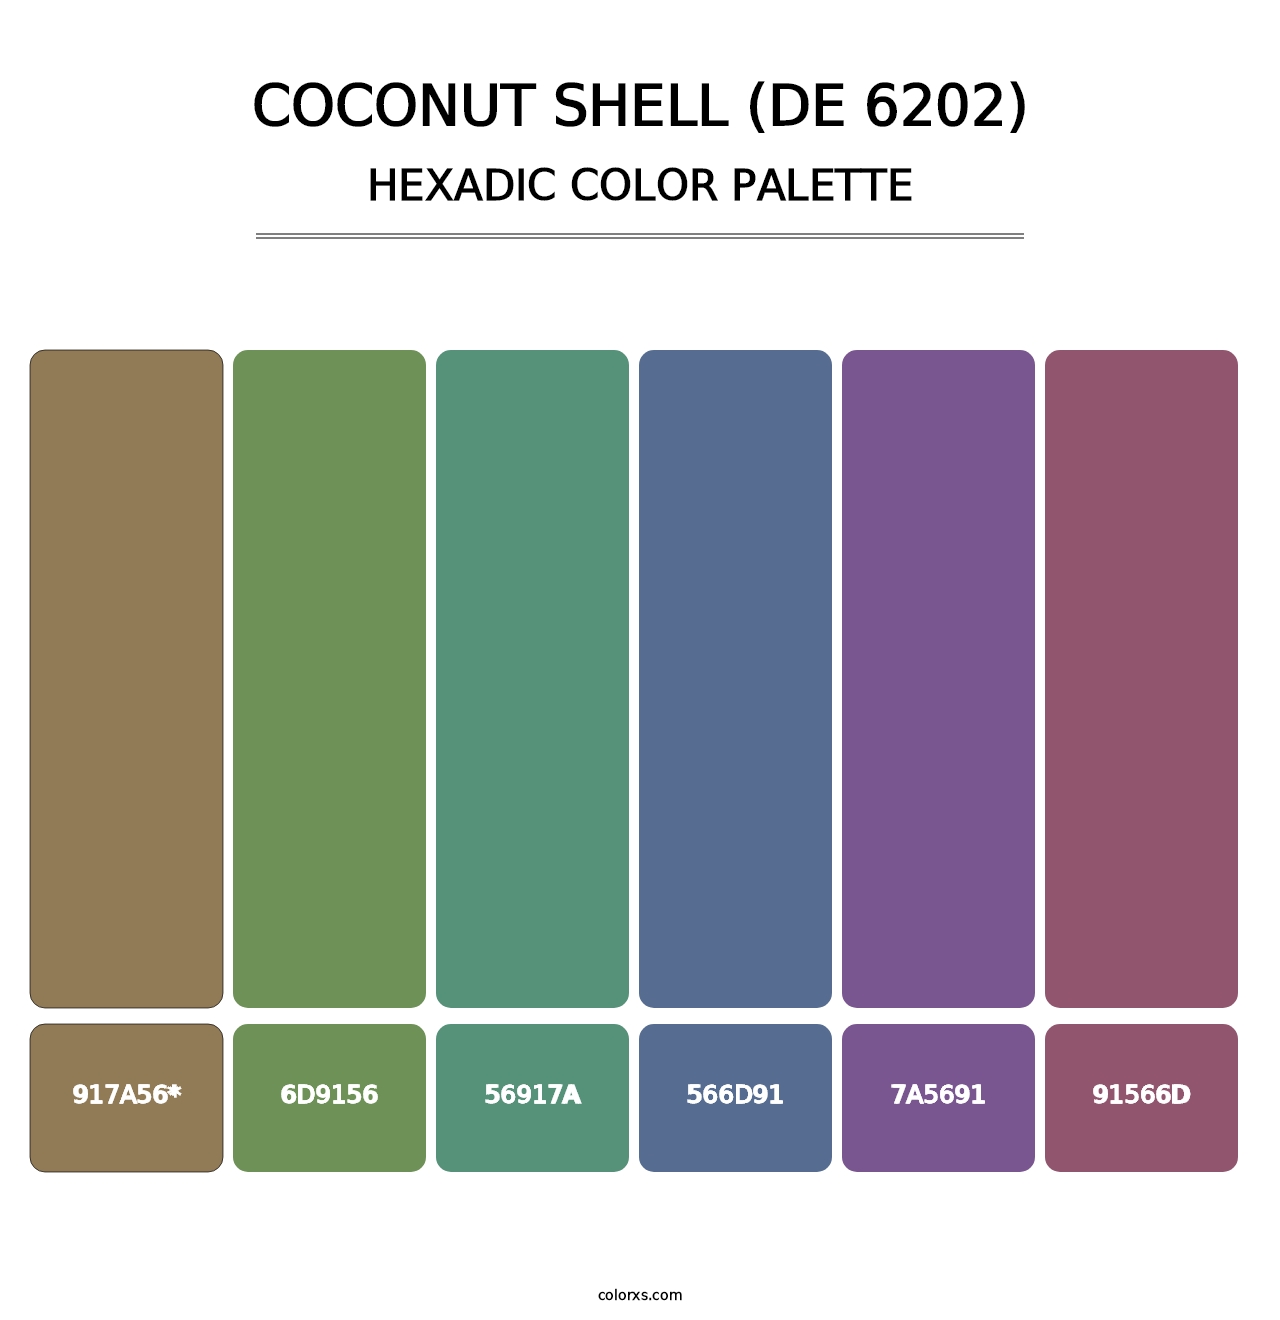 Coconut Shell (DE 6202) - Hexadic Color Palette